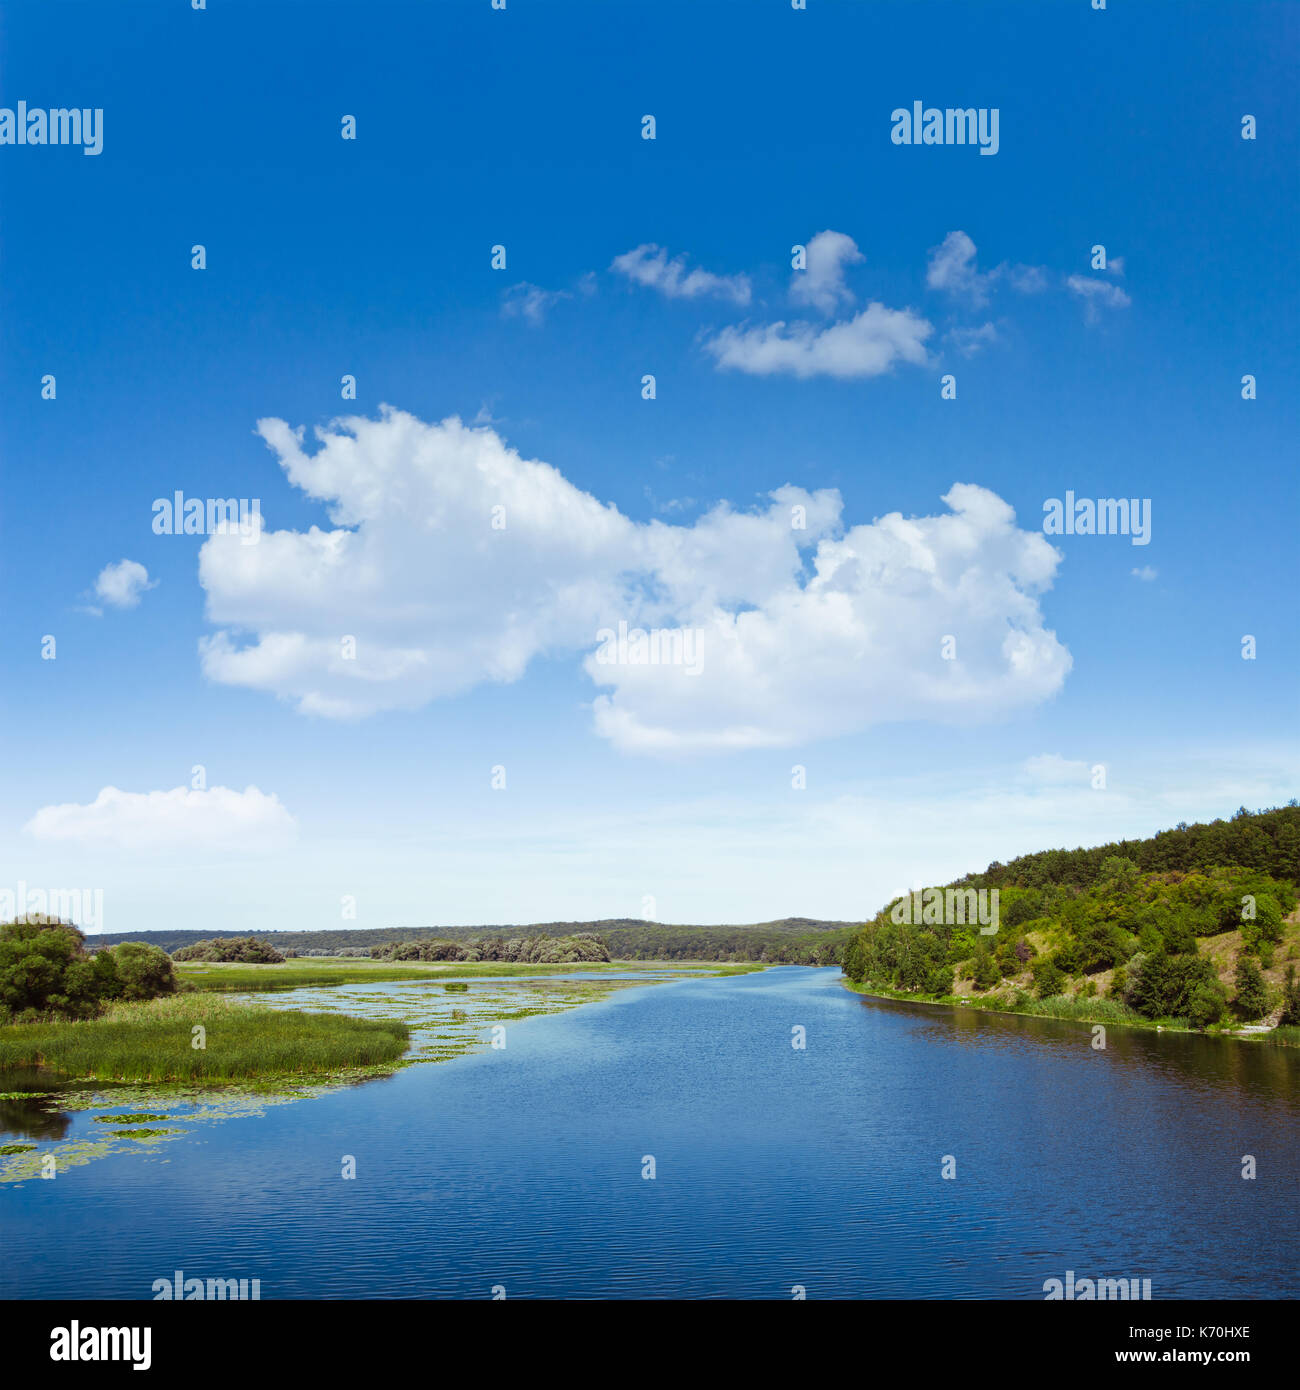 River landscape nature background Stock Photo